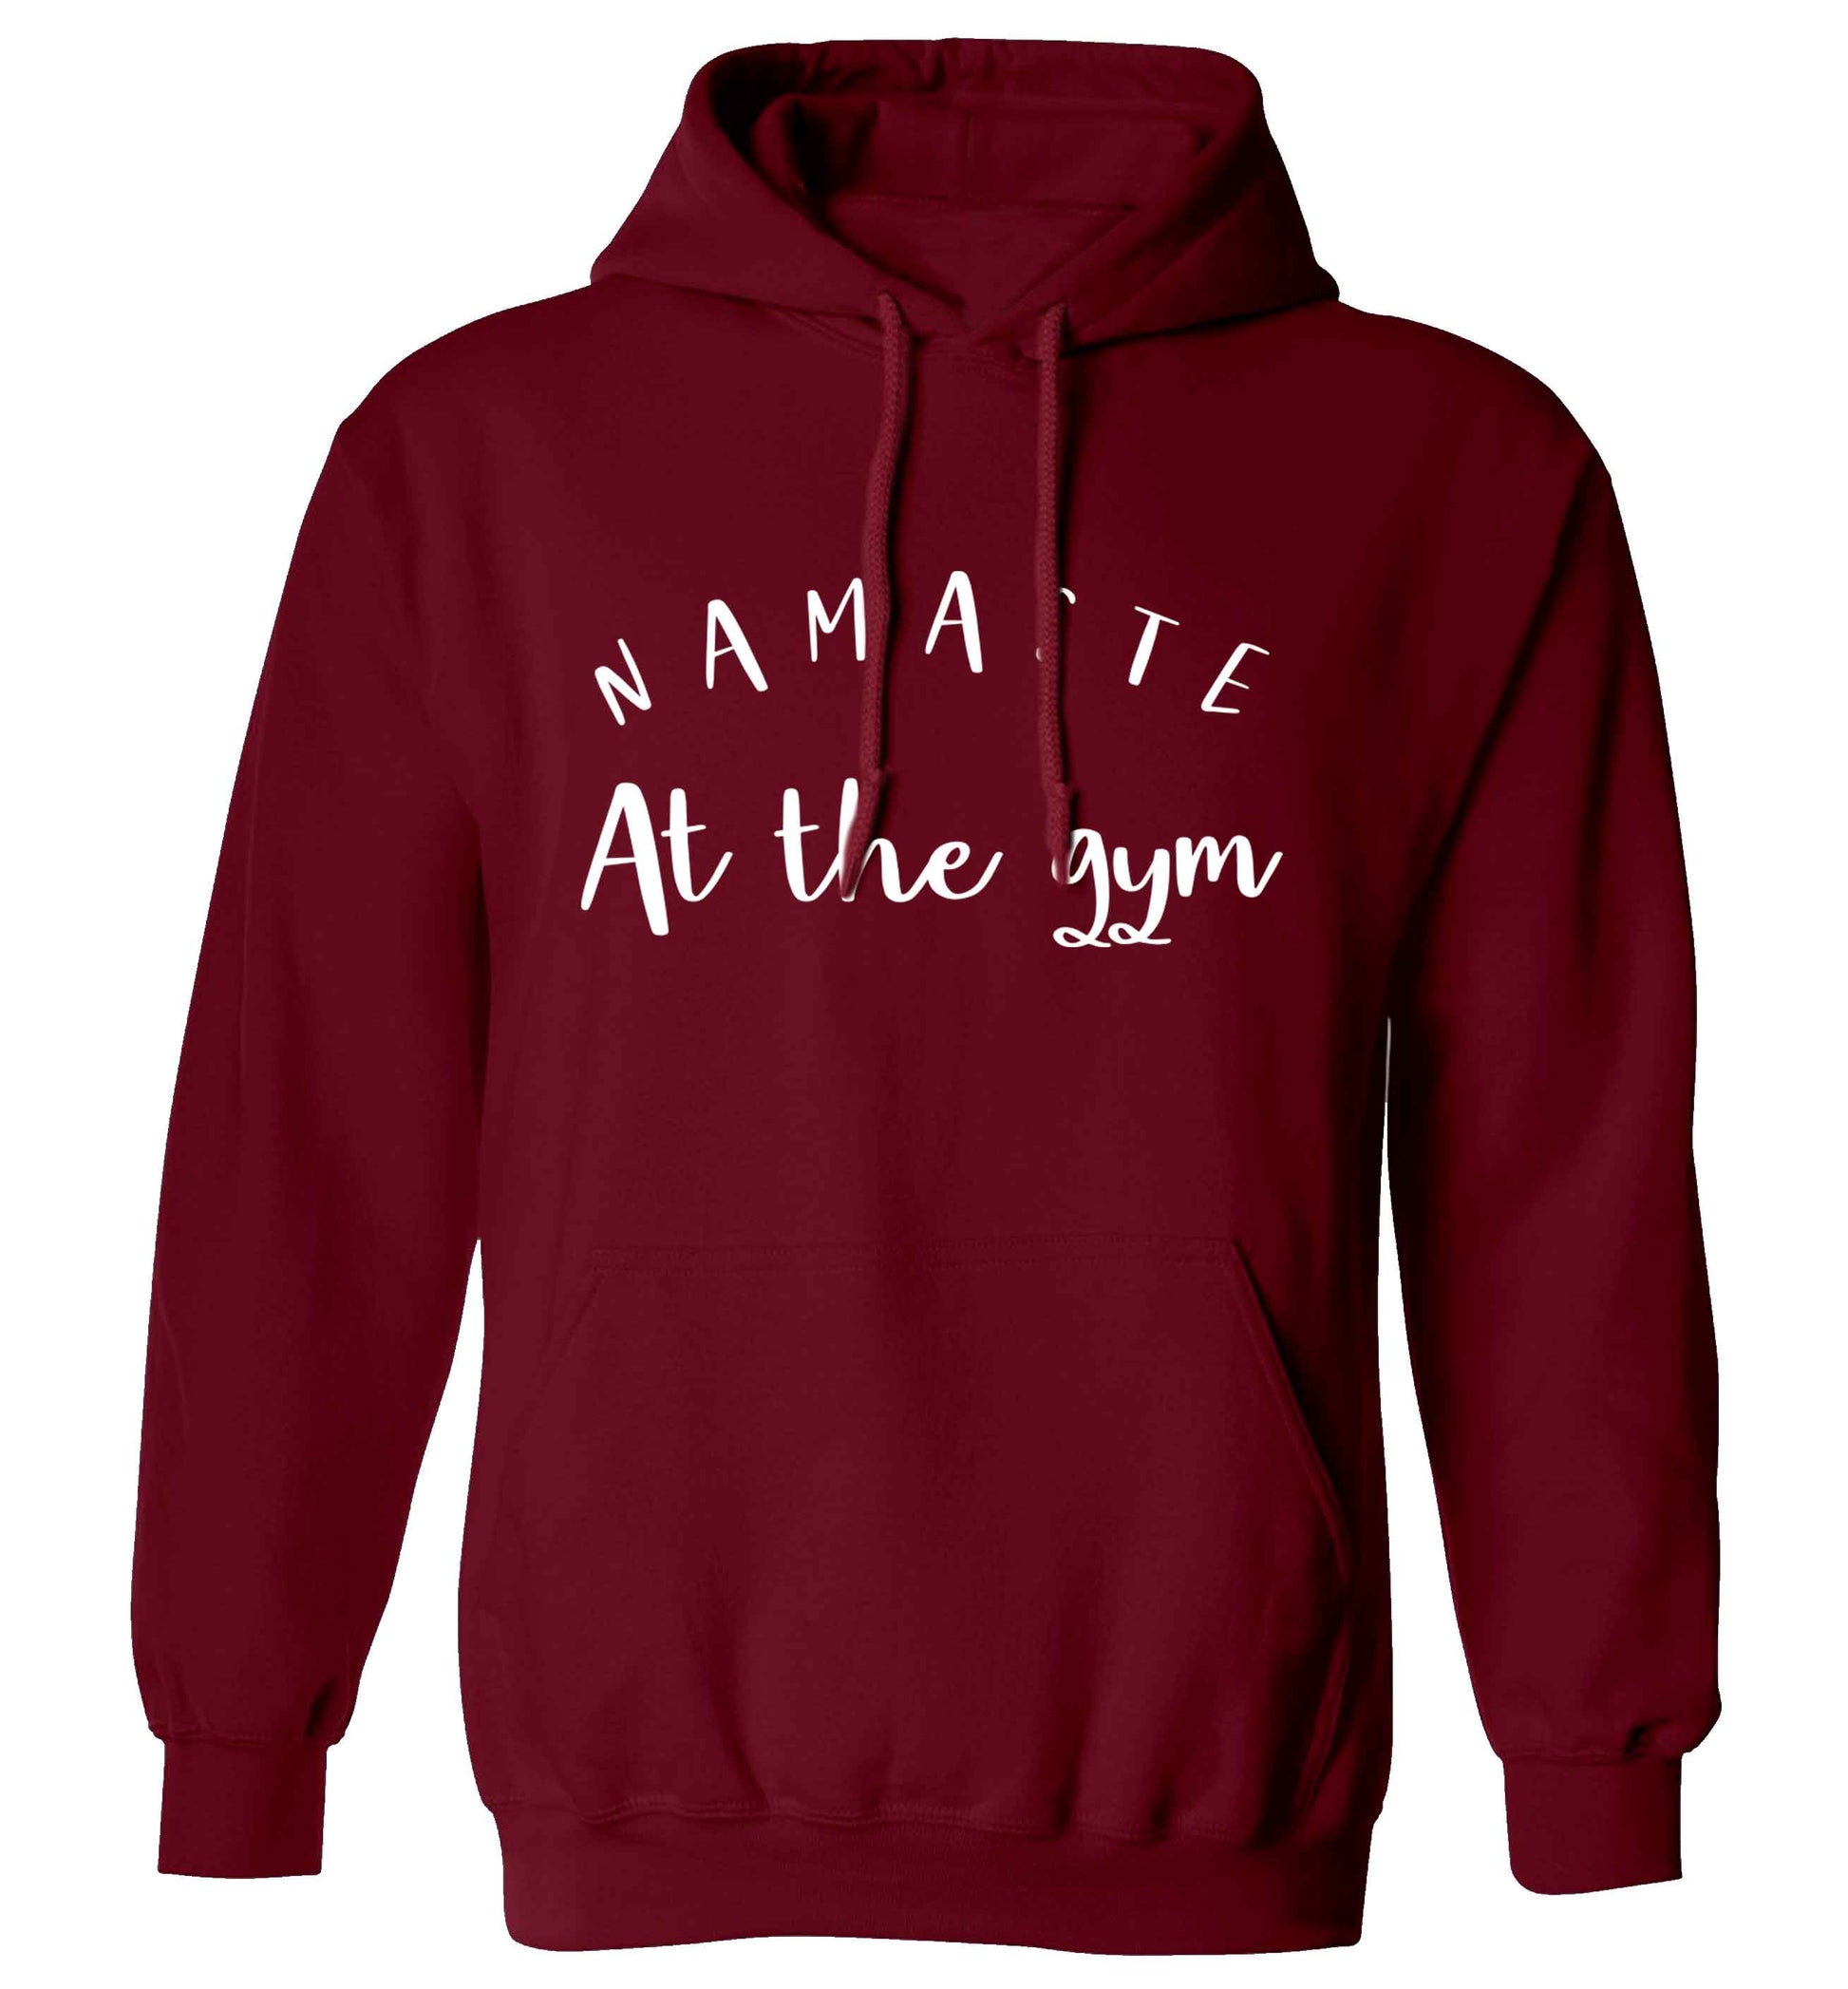 Namaste at the gym adults unisex maroon hoodie 2XL